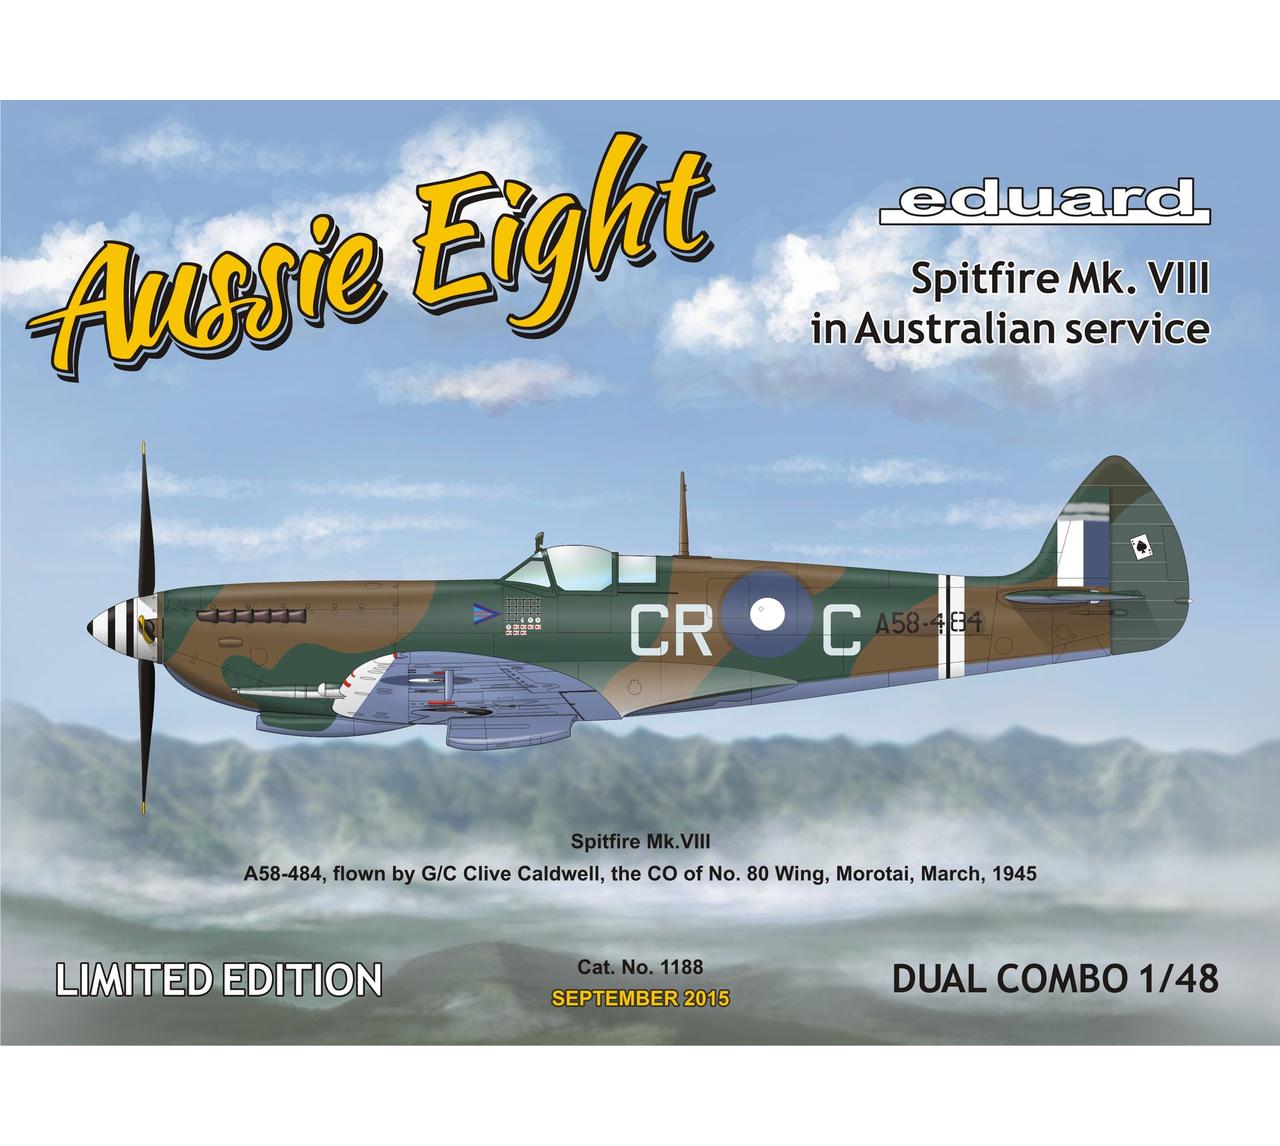 Eduard Spitfire-kavalkad, Aussie Eight #1 klar, Aussie Eight #2 NY!, Bonus: Airfix Spitfire XII - Sida 12 01